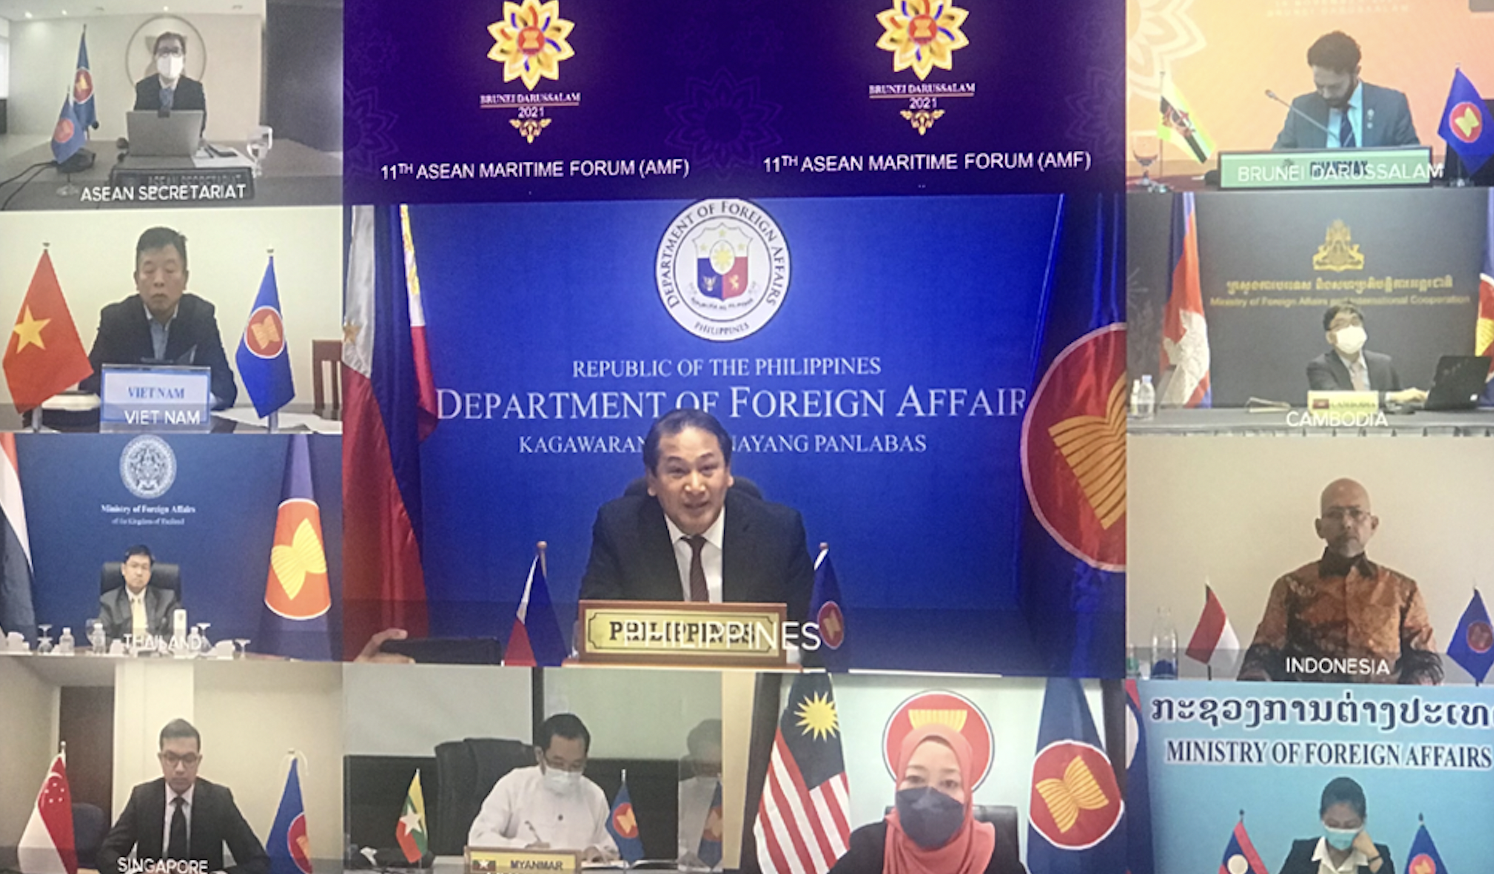 Foreign Affairs Assistant Secretary Daniel R. Espiritu, ASEAN-PH Director-General, asserts the 2016 Arbitral Award during the 11th ASEAN Maritime Forum held virtually on 16 November 2021.